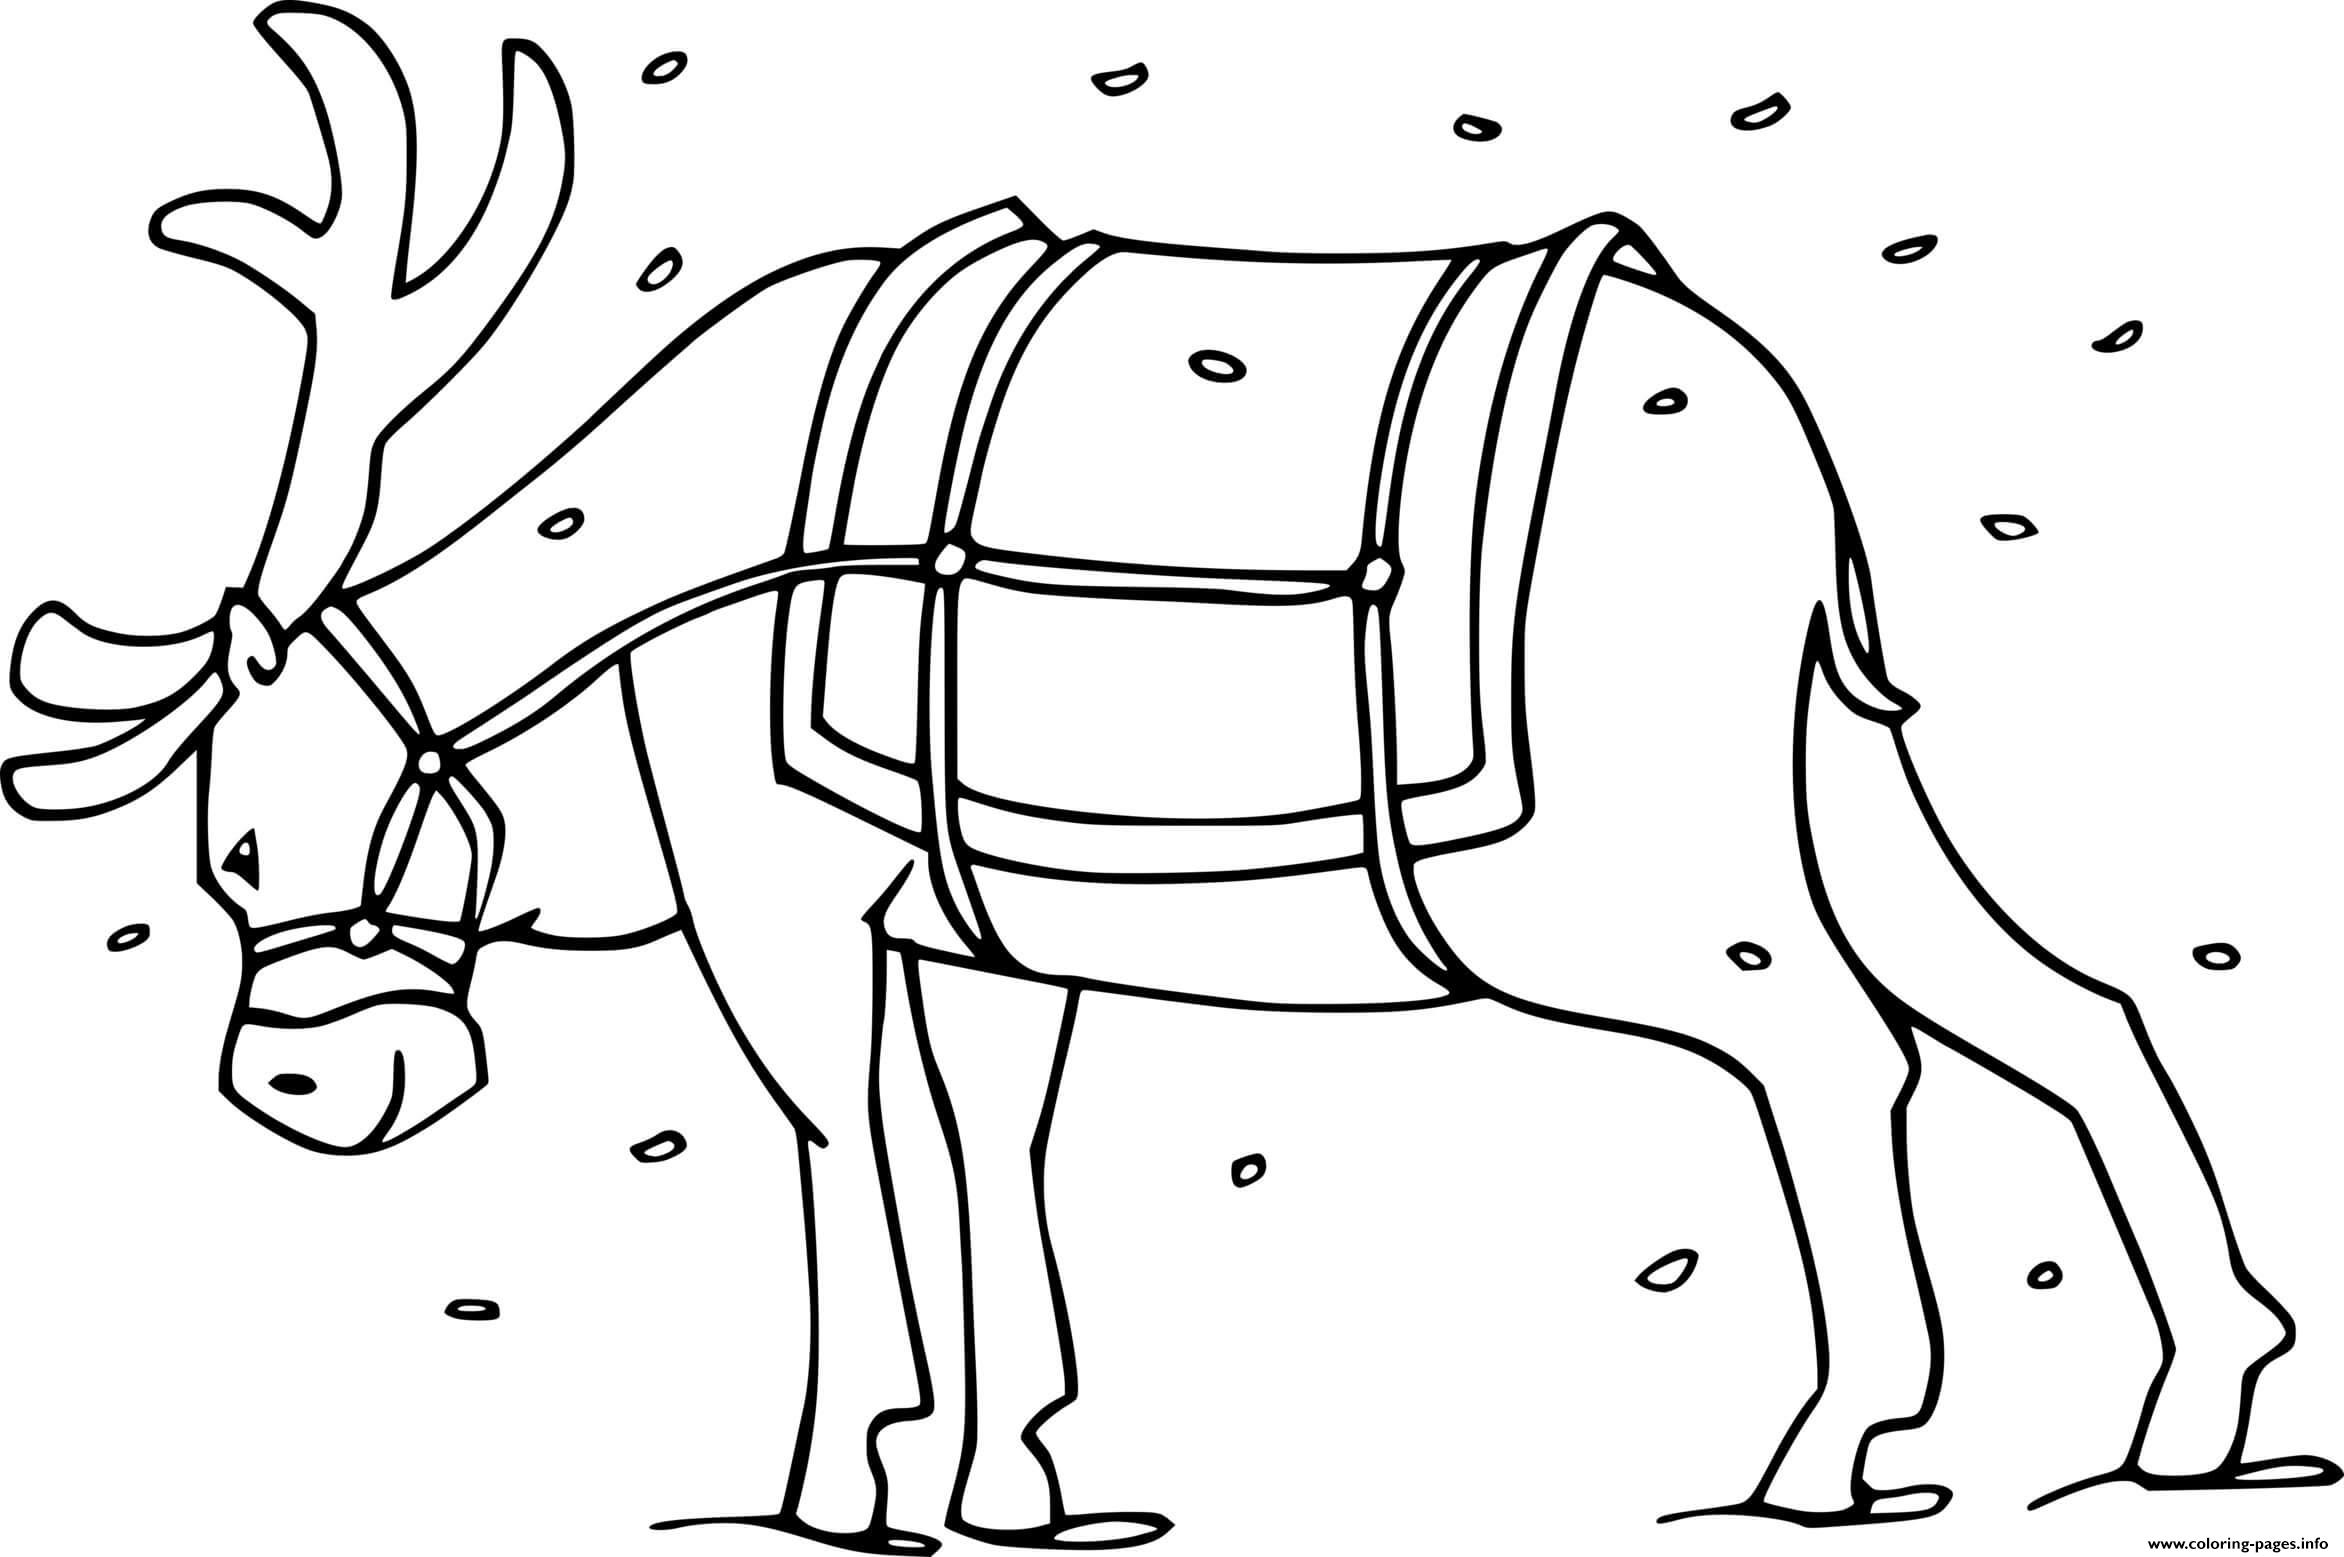 Reindeer In The Snow coloring